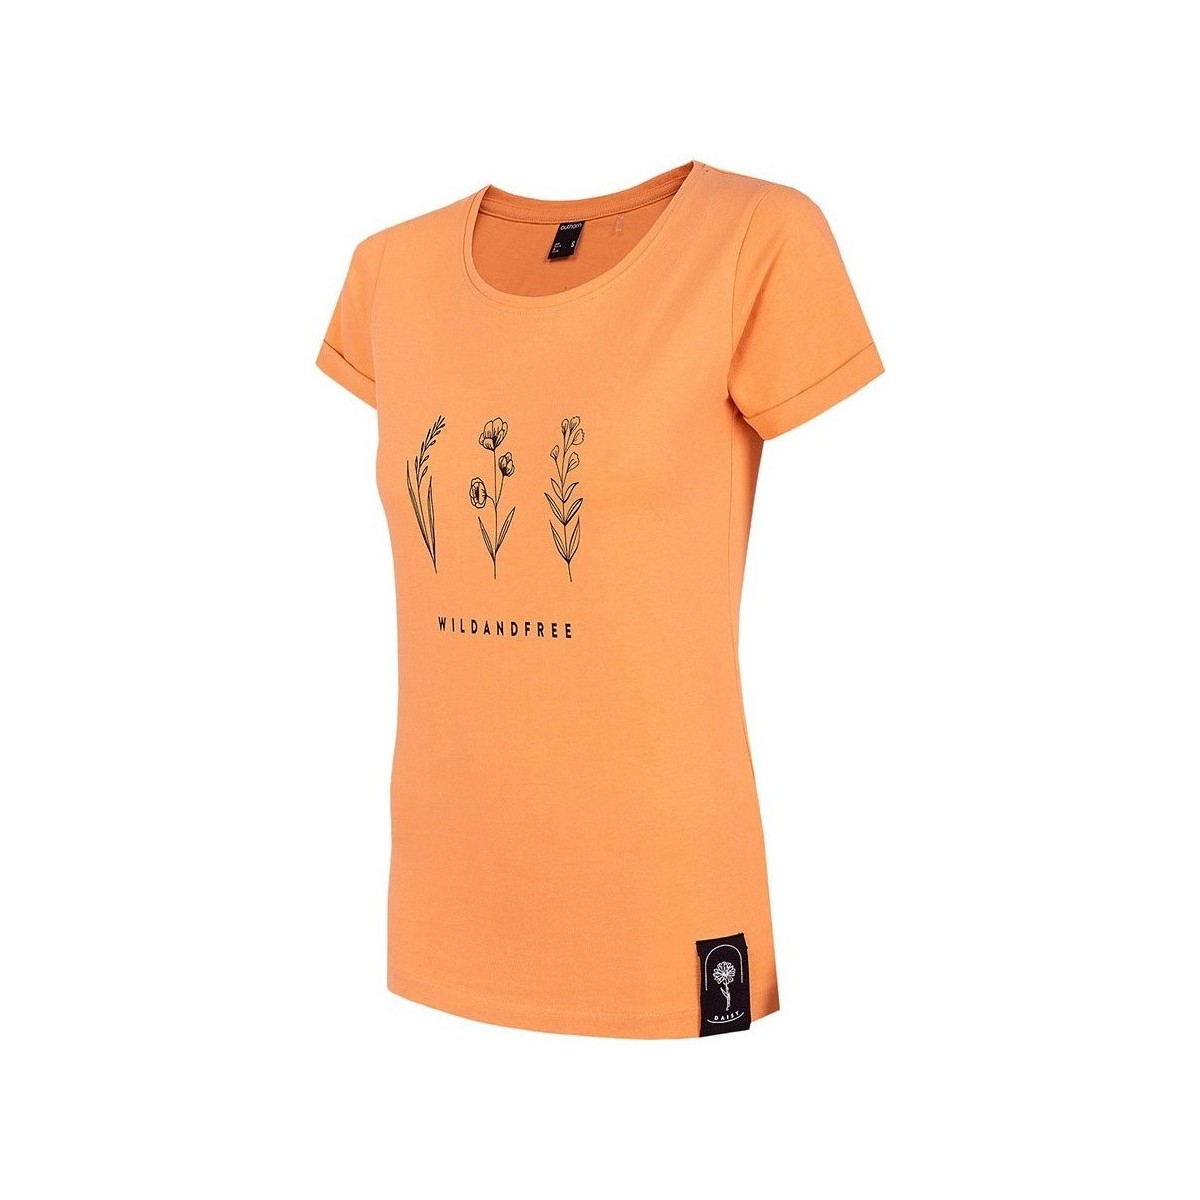 Textiel Dames T-shirts korte mouwen Outhorn TSD613 Orange